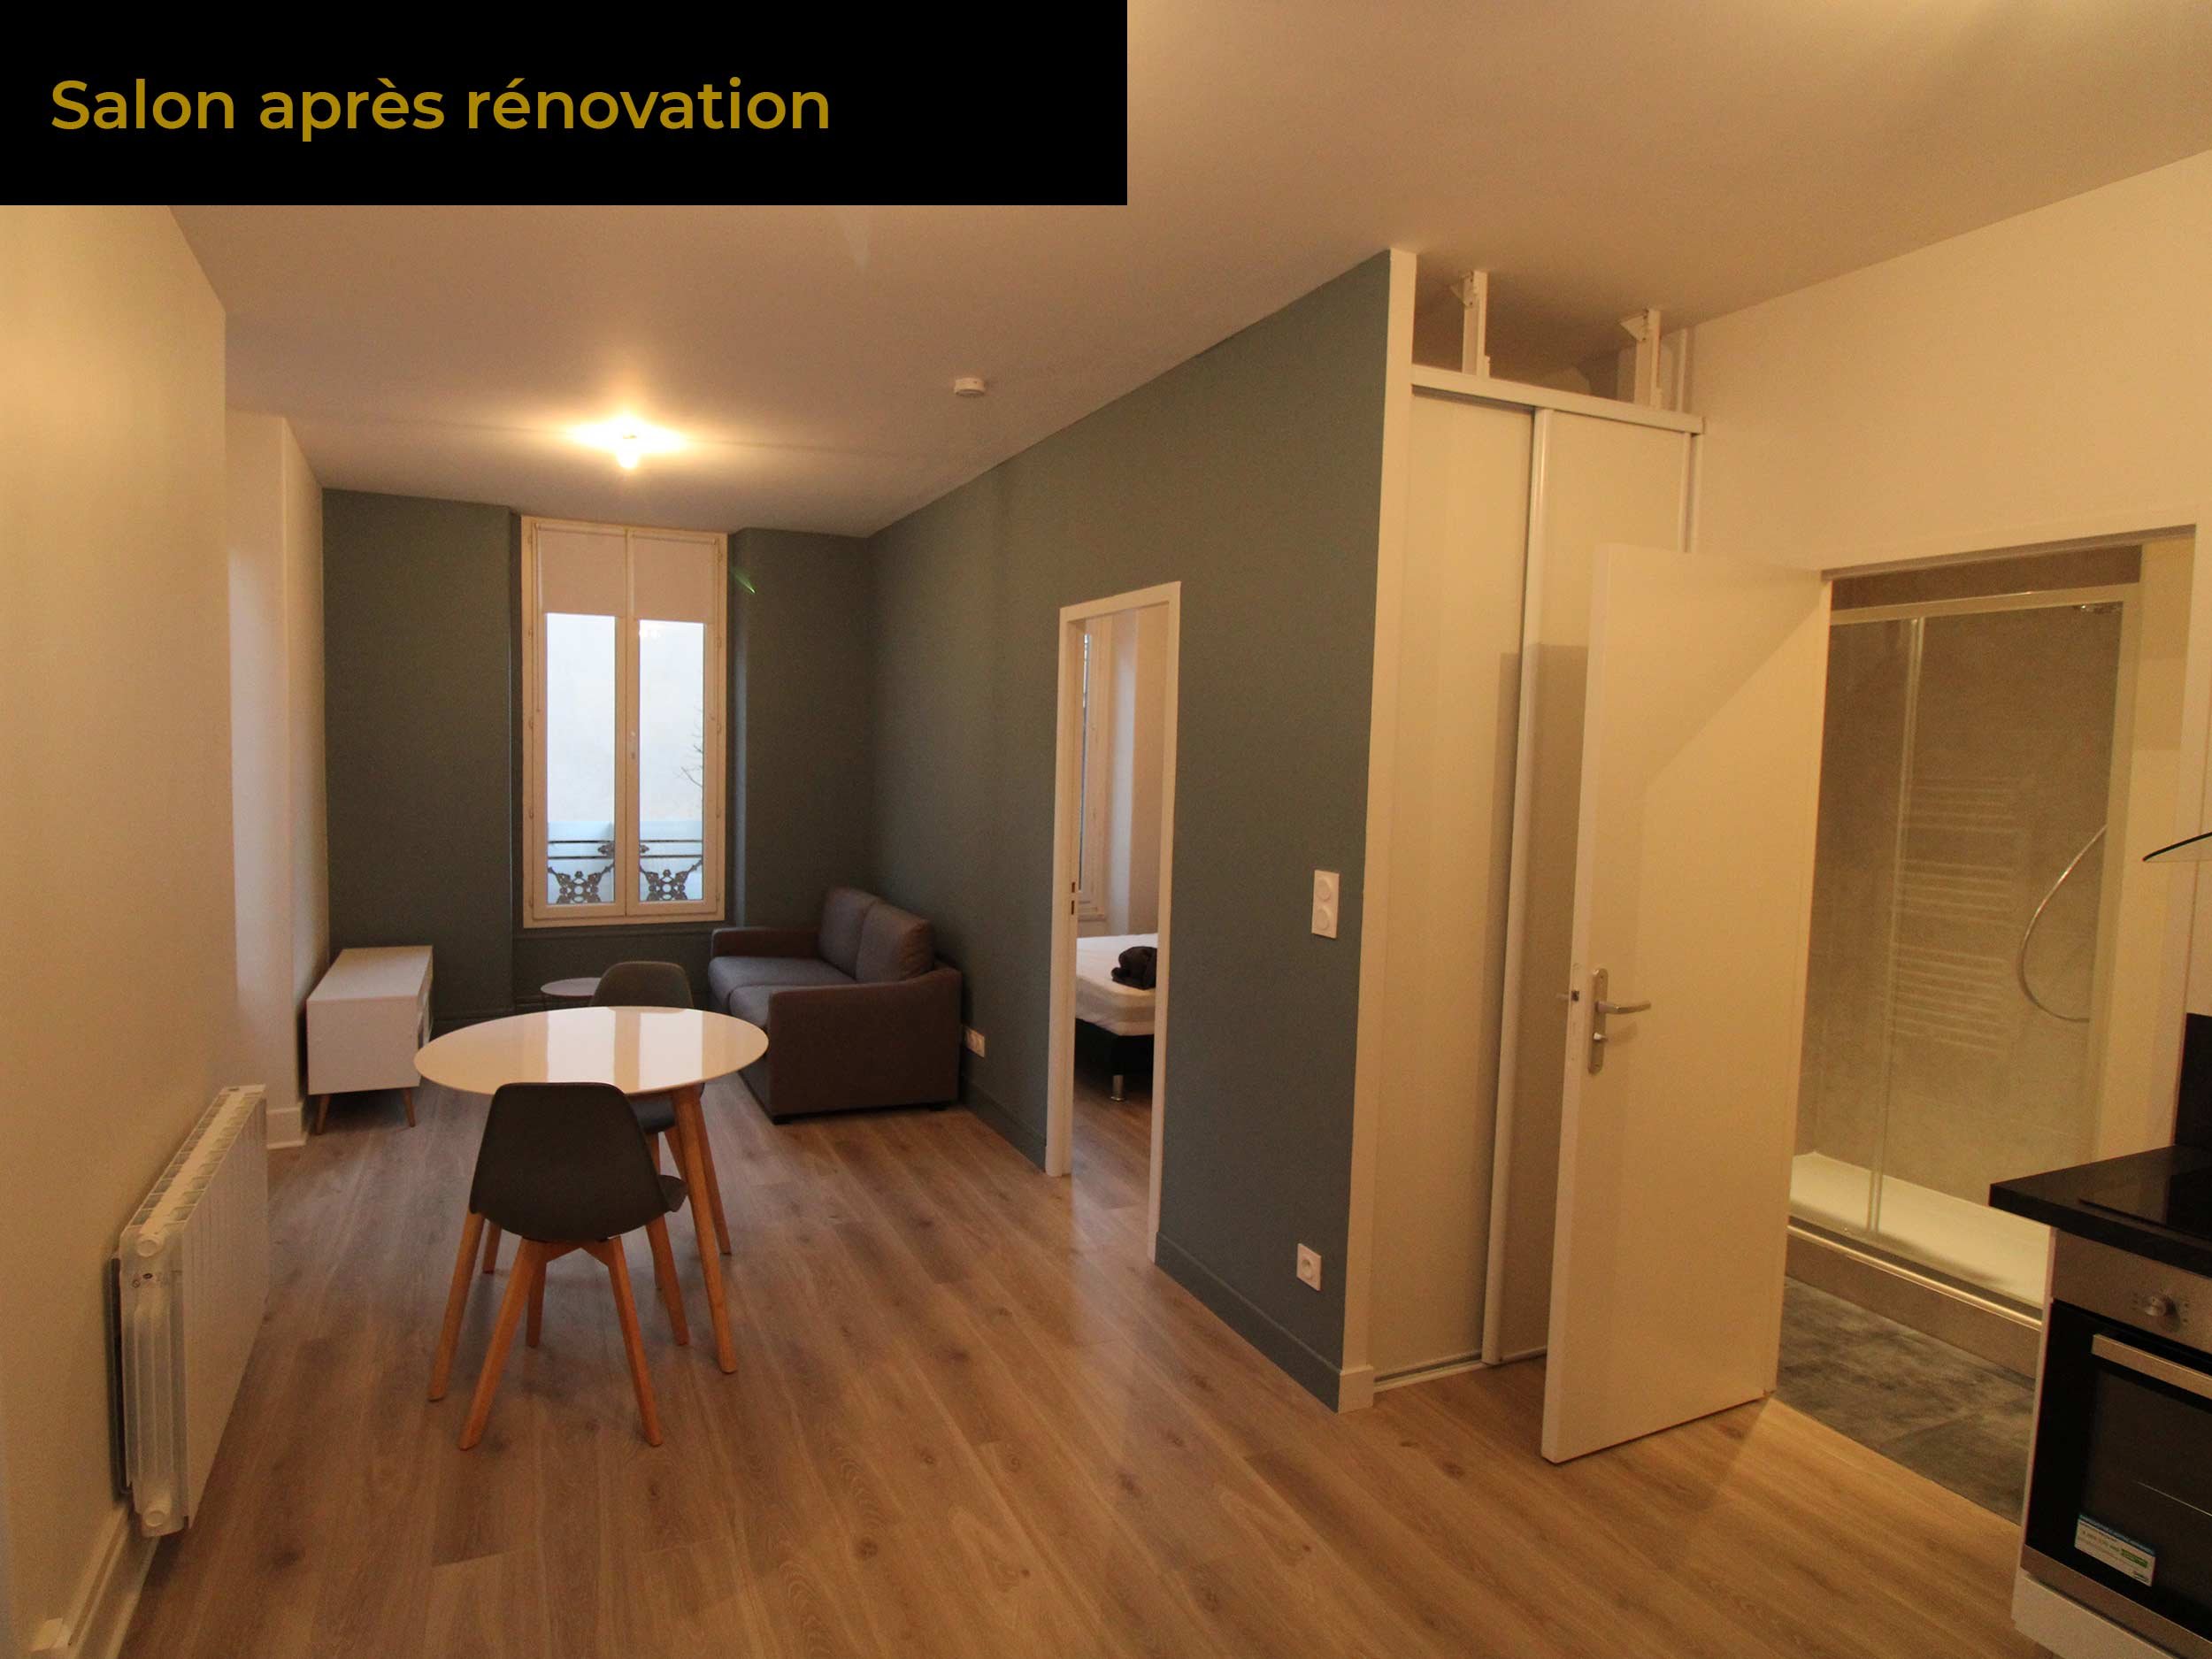 5a-transformer-un-plateau-en-appartement-salon-apres-renov